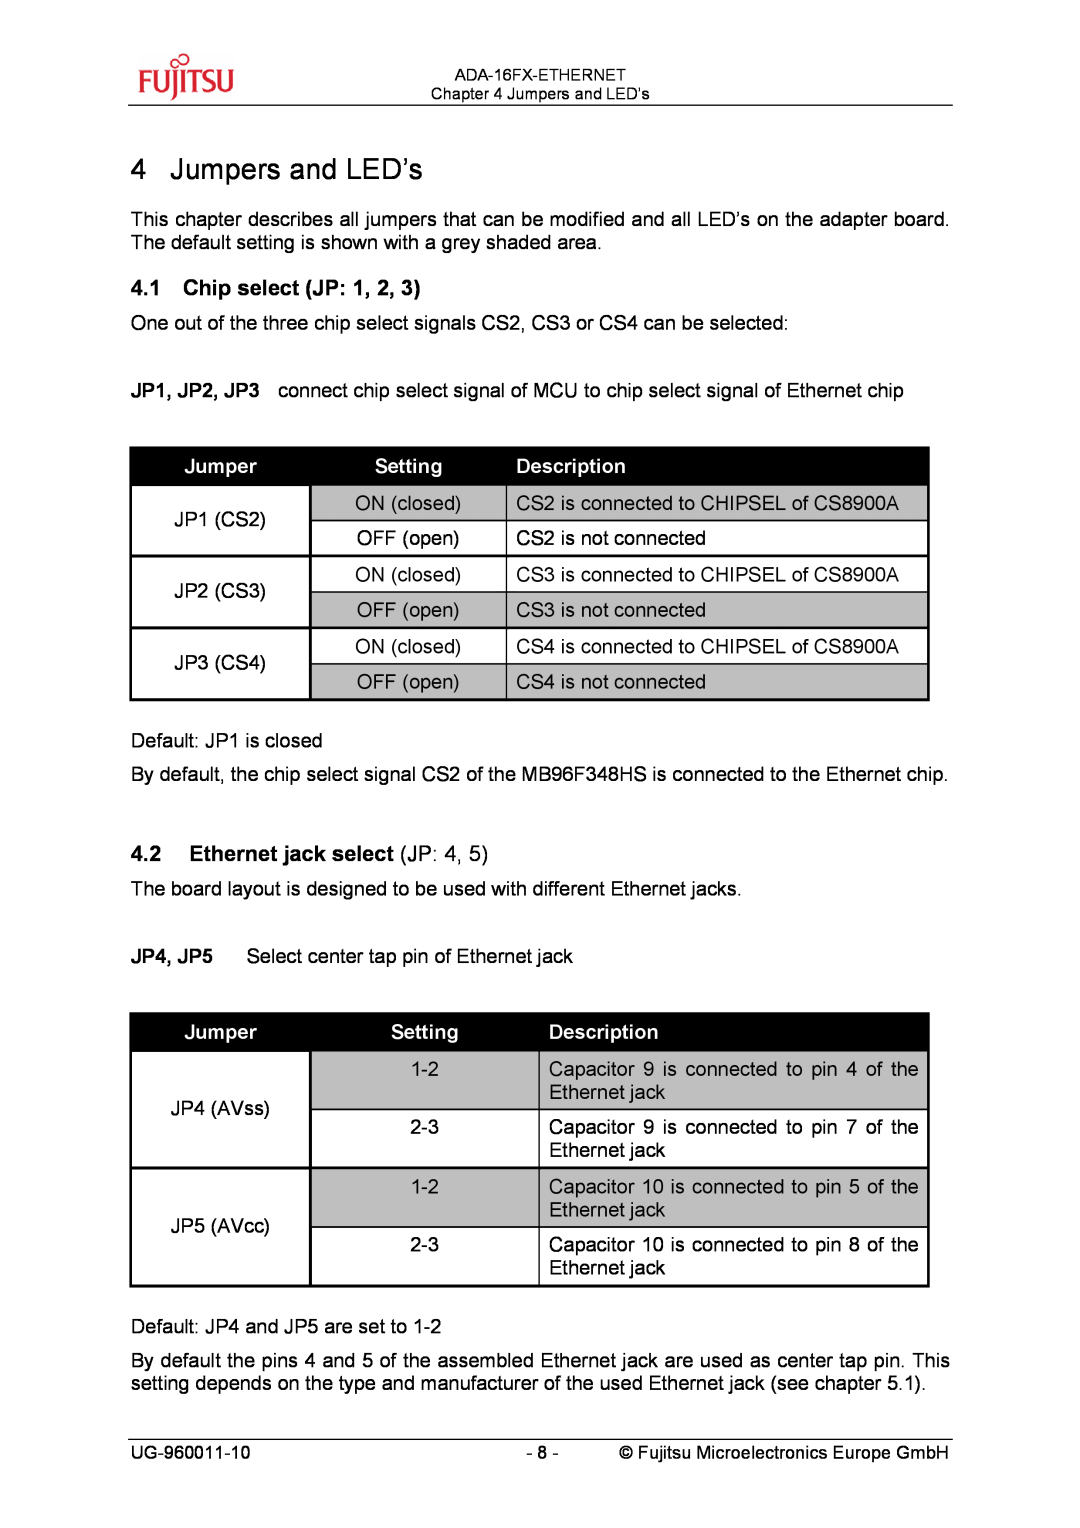 Fujitsu FMC-16FX FAMILY manual Jumpers and LED’s, Chip select JP, Ethernet jack select JP 4, Setting, Description 